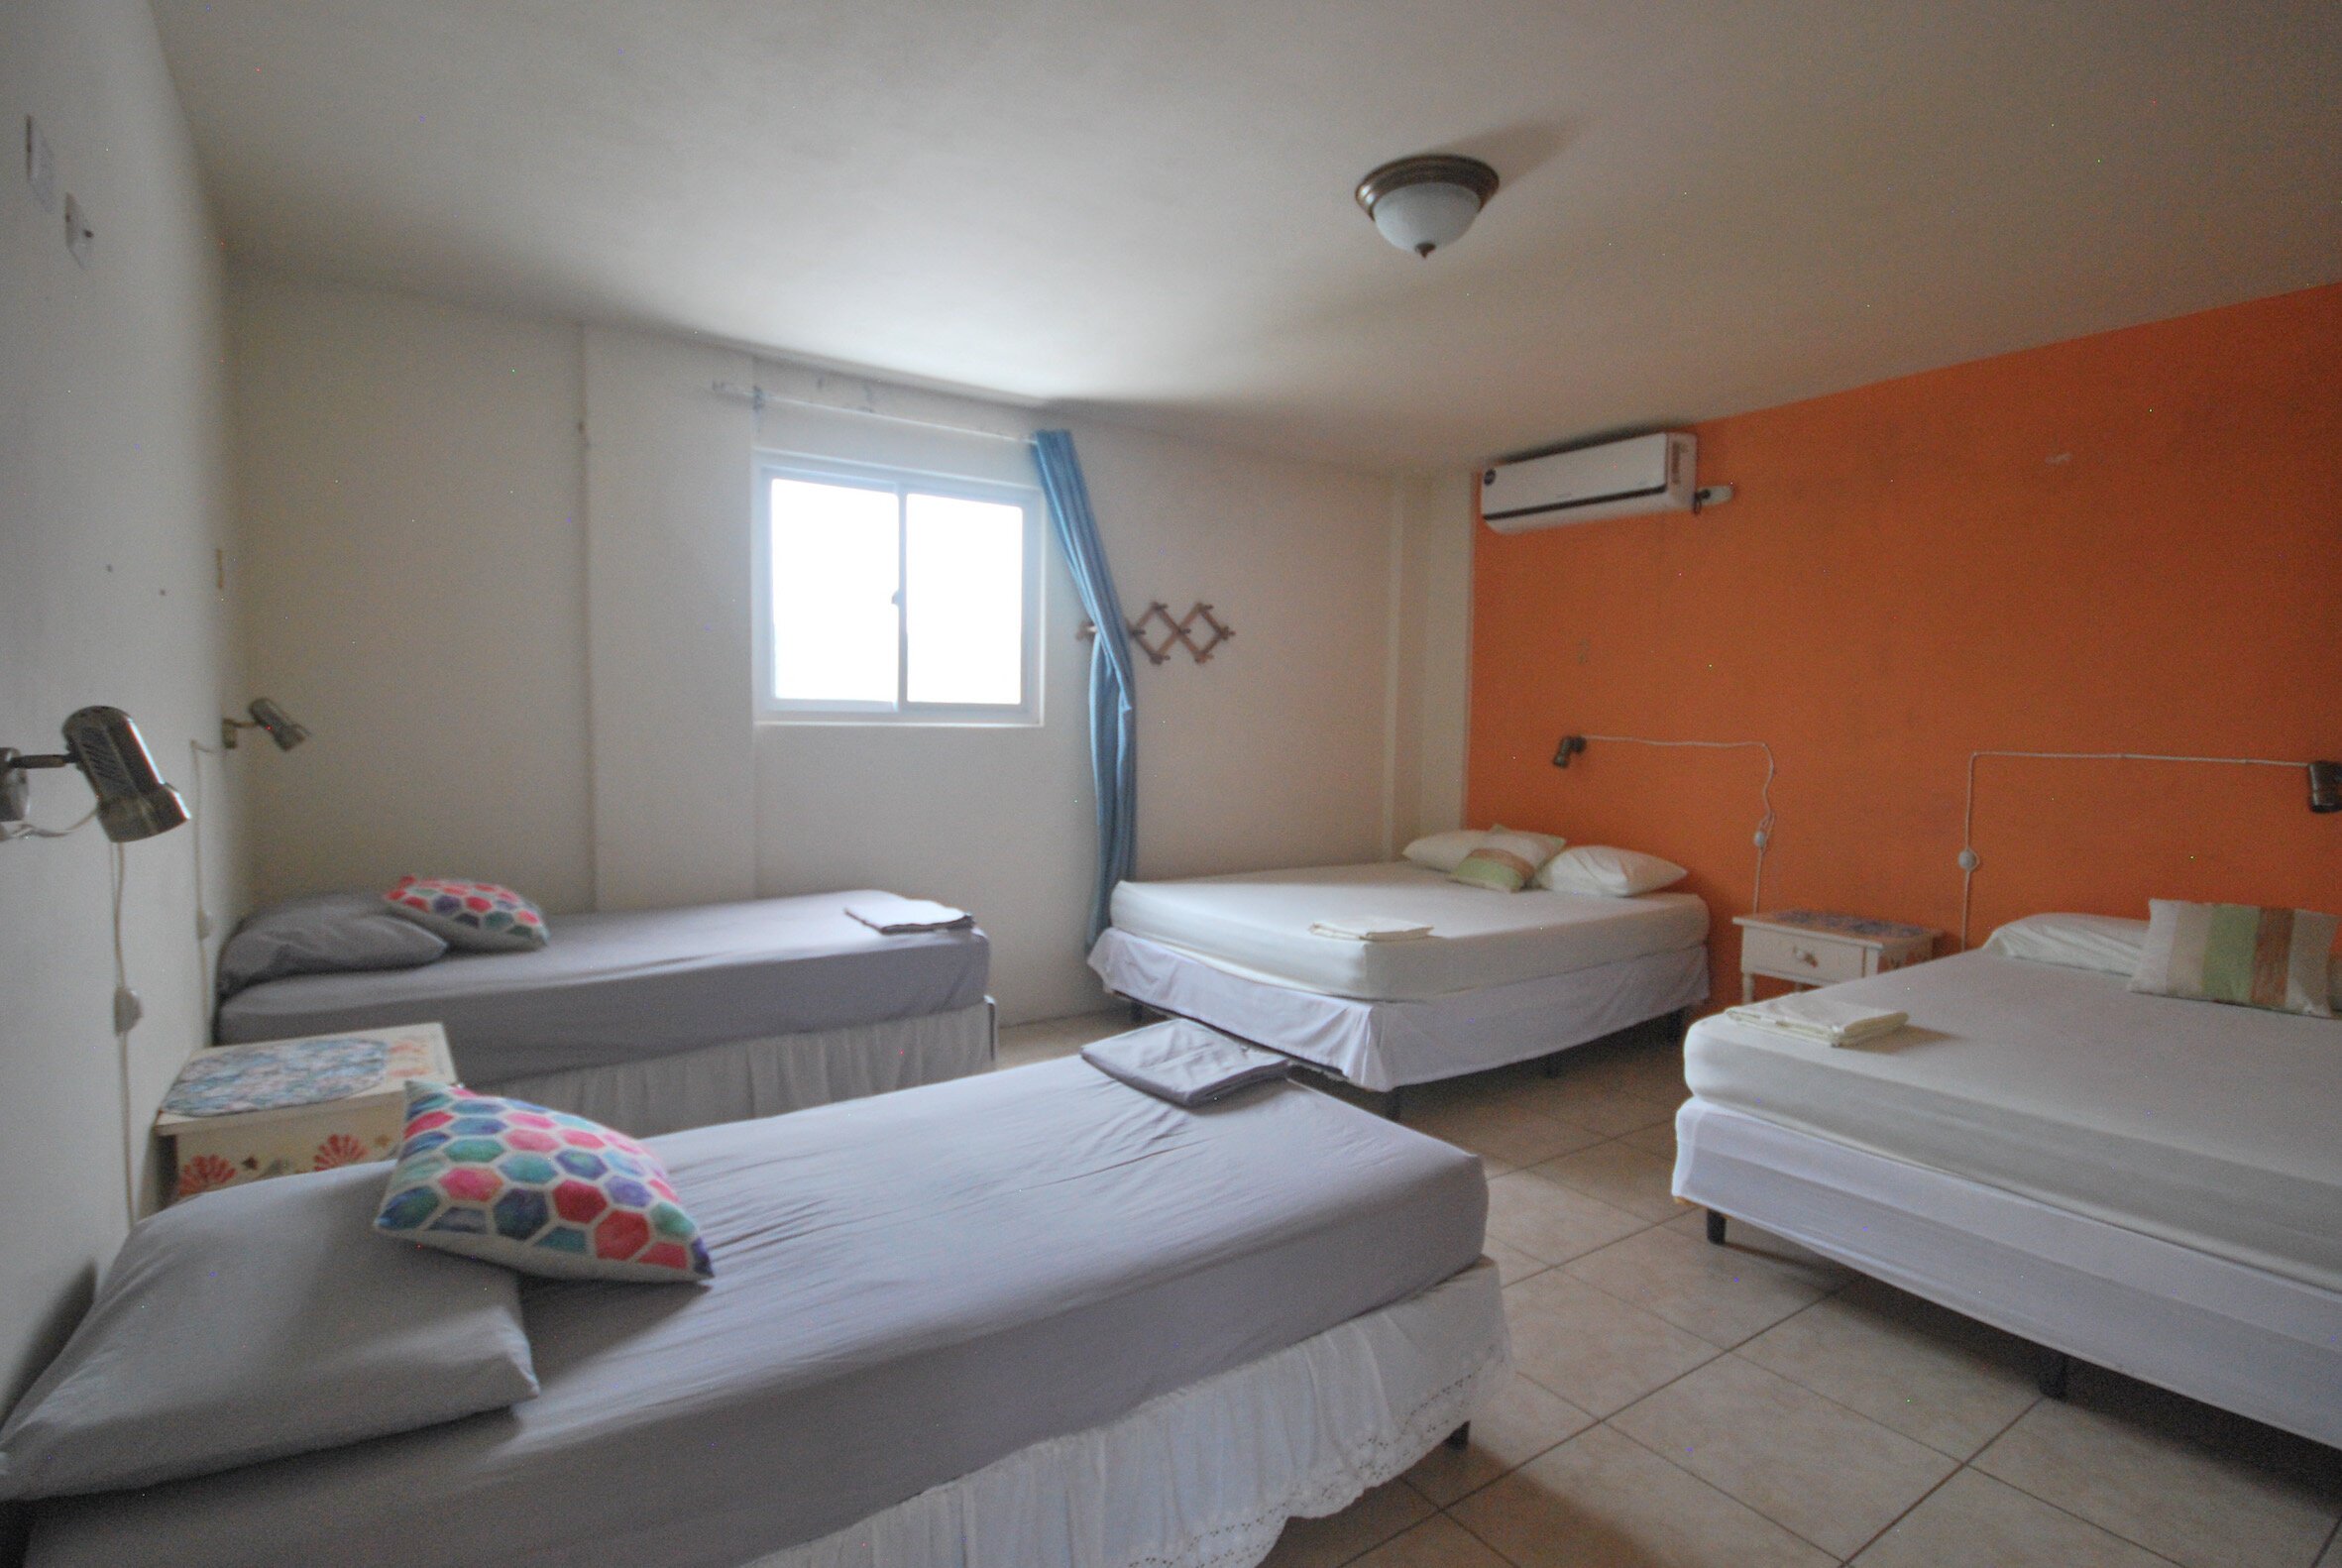 Hotel Resort For Sale San Juan Del Sur Nicaragua 18.JPEG